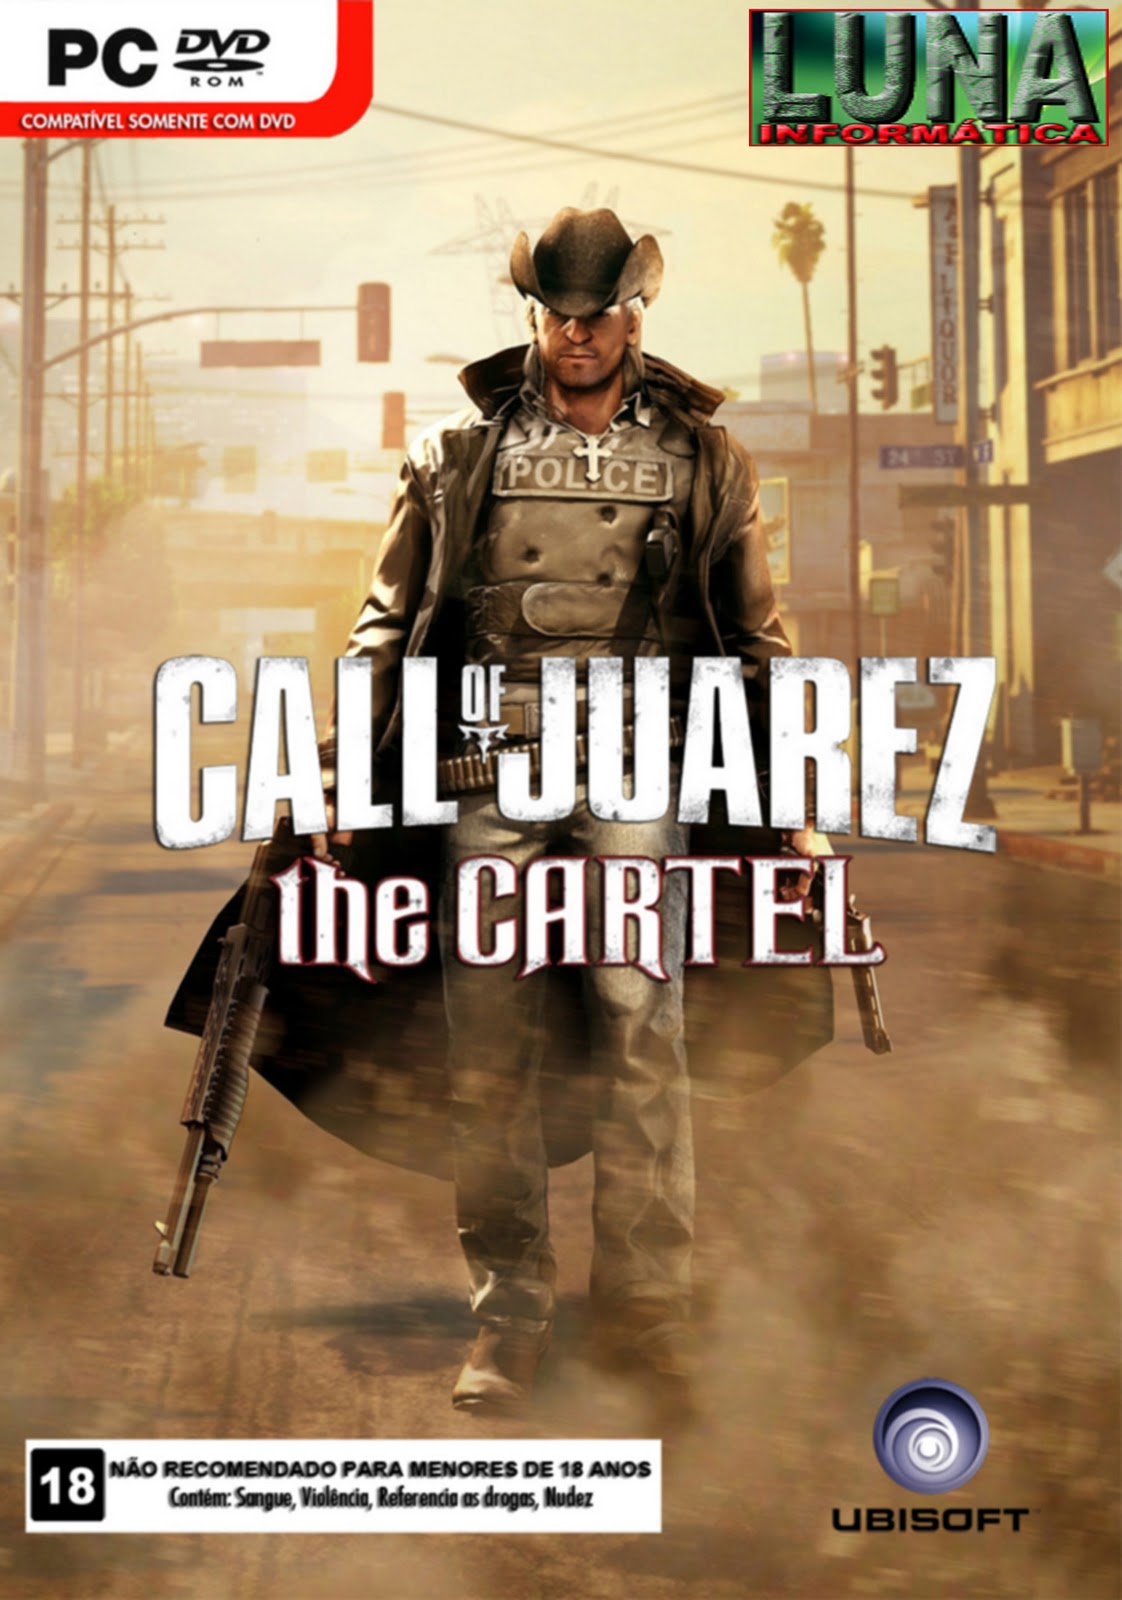 Call of juarez cartel нет в стиме фото 60